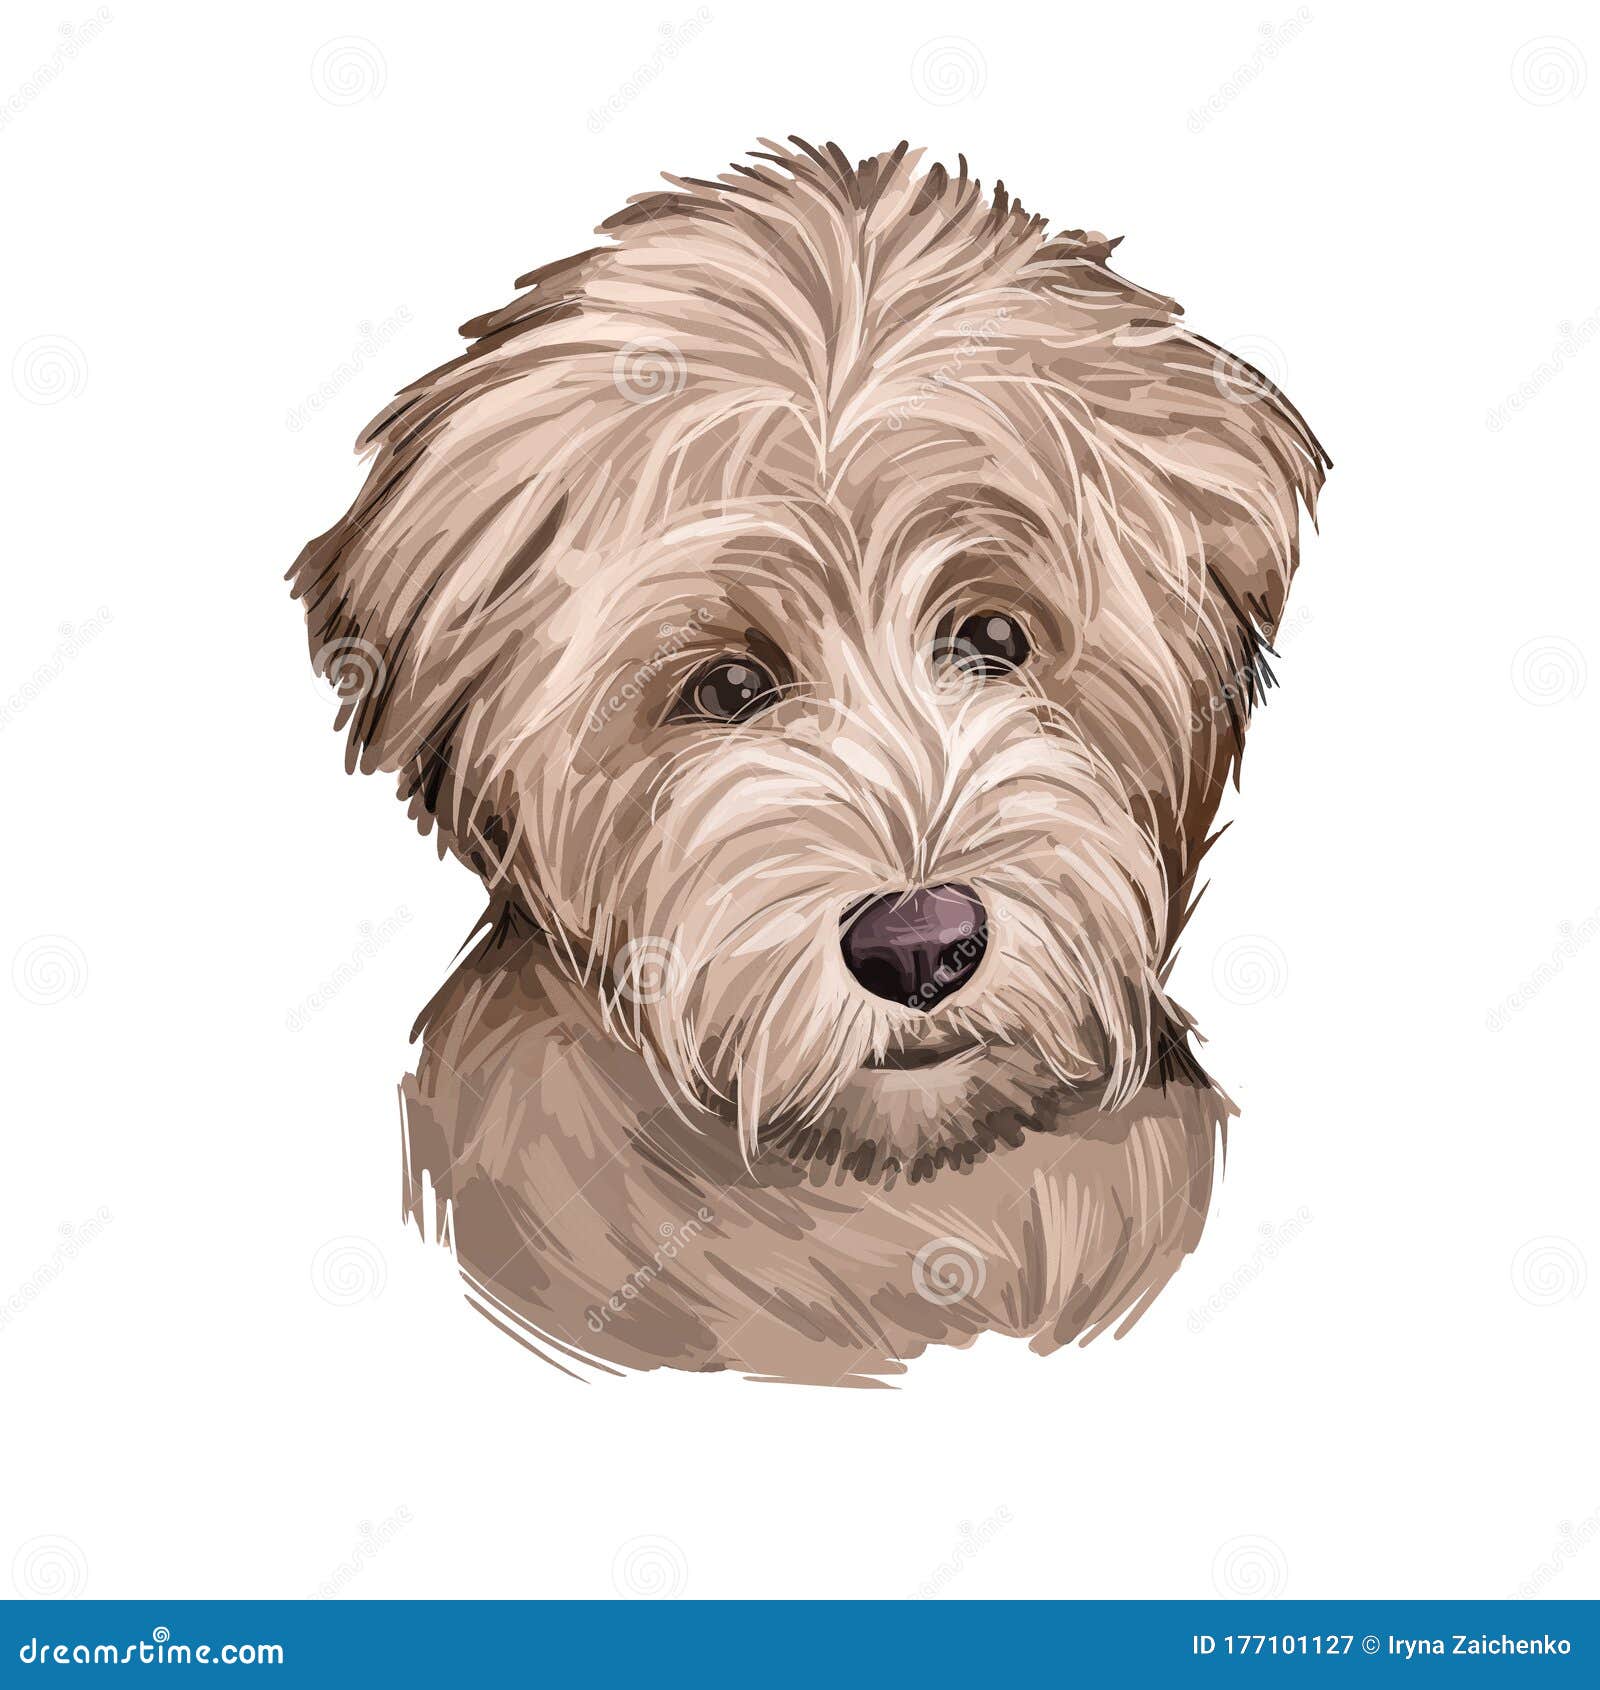 Schnoodle Dog Digital Art Illustration Isolated on White Stock